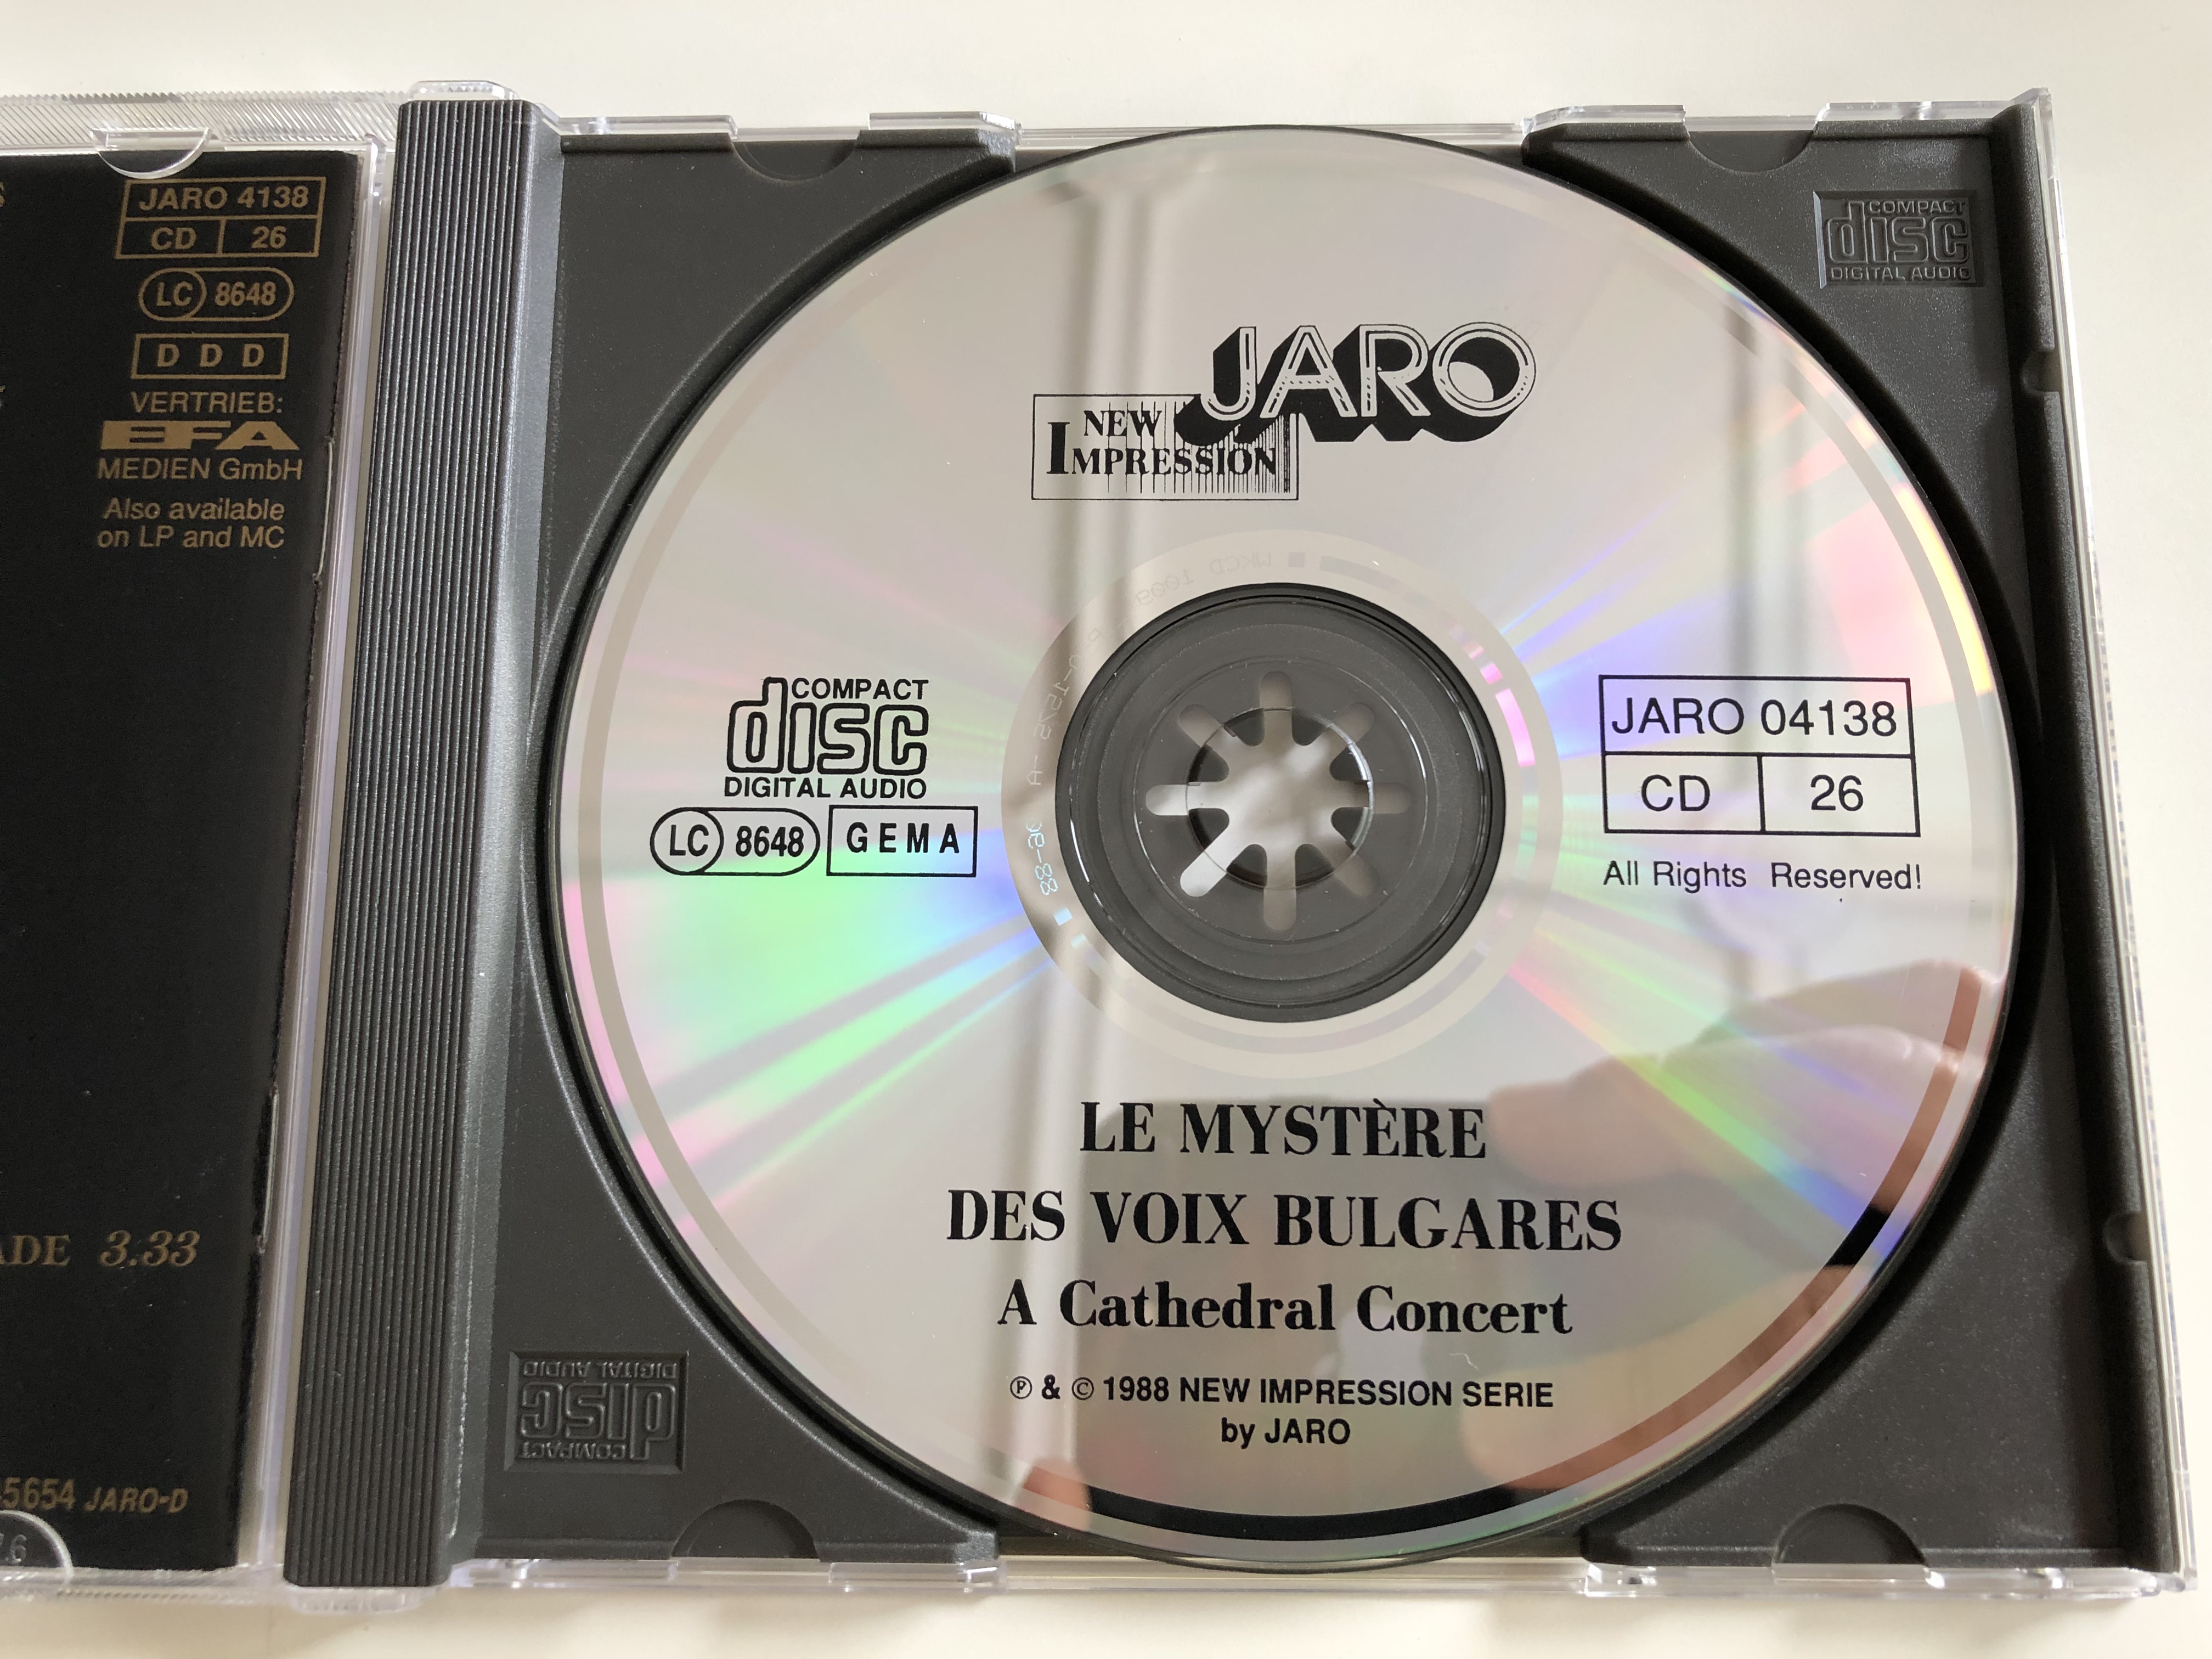 le-myst-re-des-voix-bulgares-a-cathedral-concert-jaro-audio-cd-1988-jaro-04138-6-.jpg